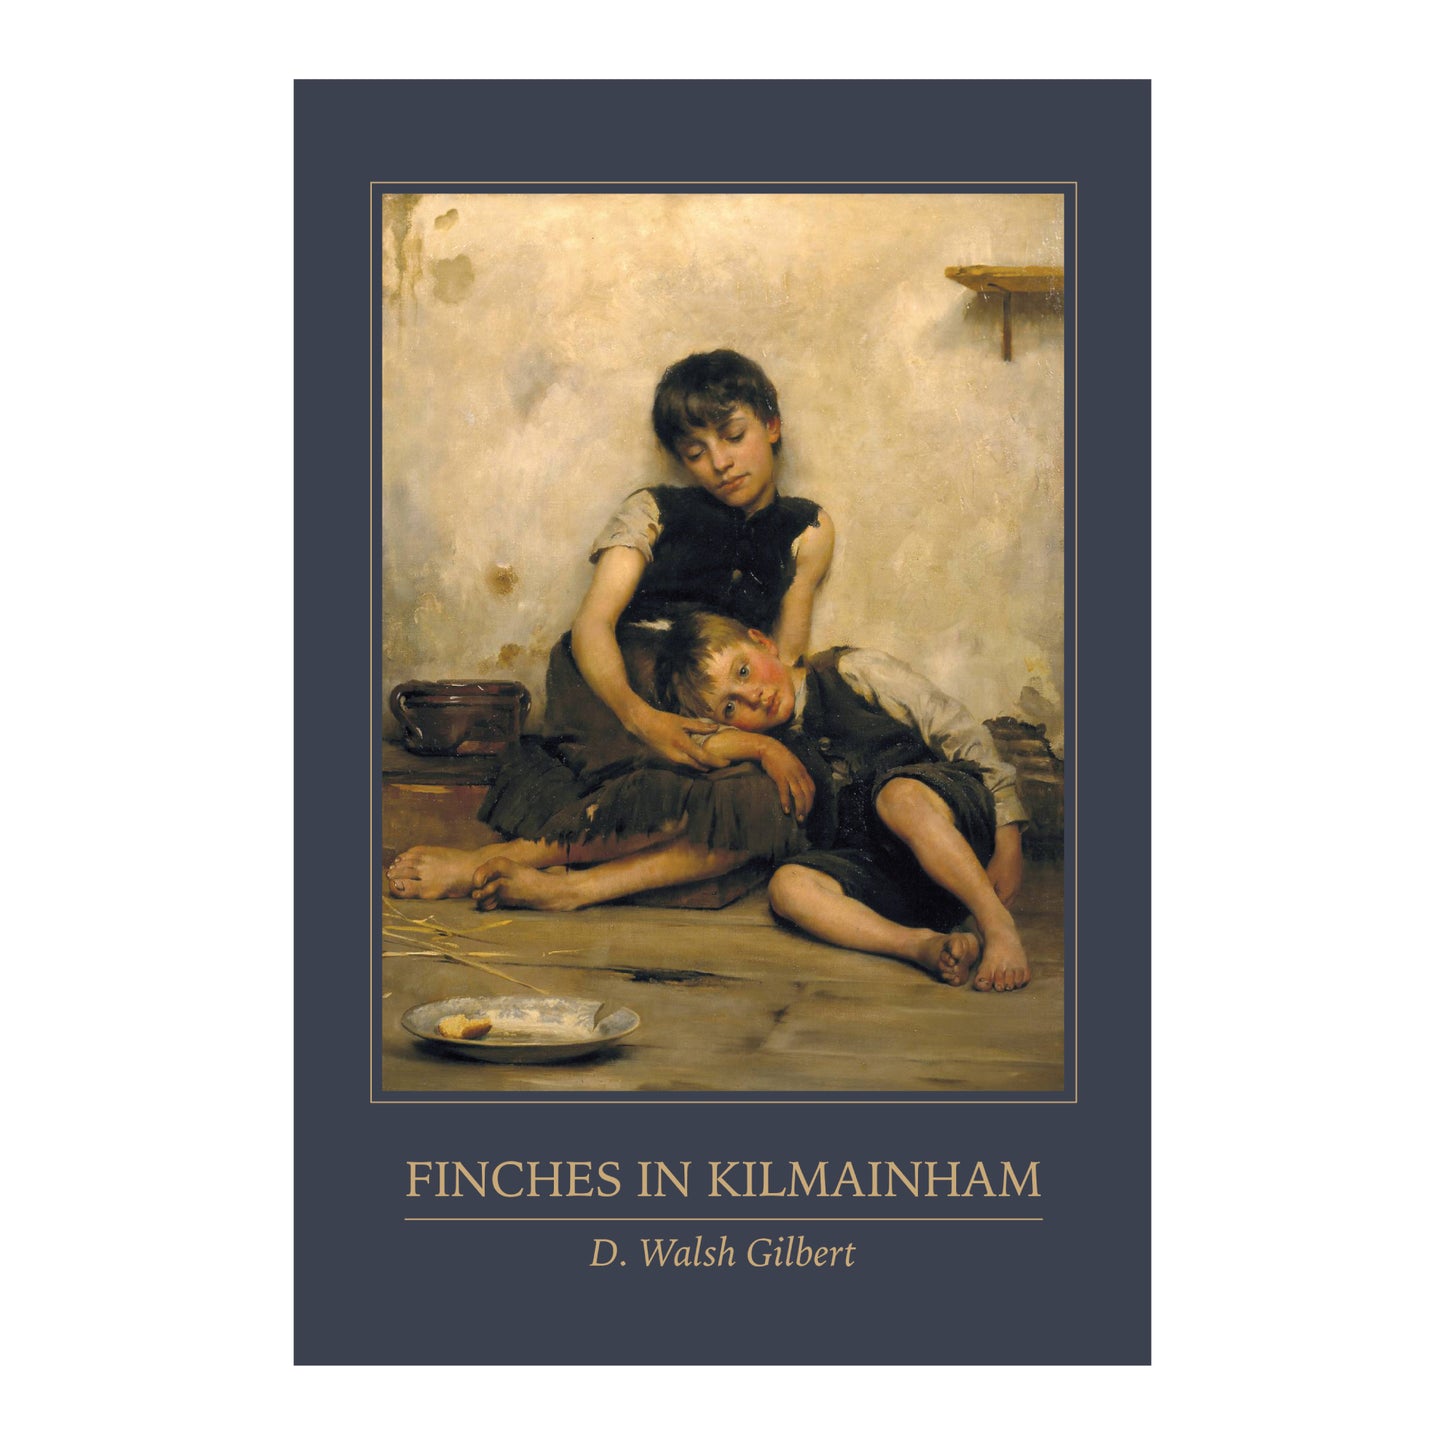 Finches in Kilmainham by D. Walsh Gilbert